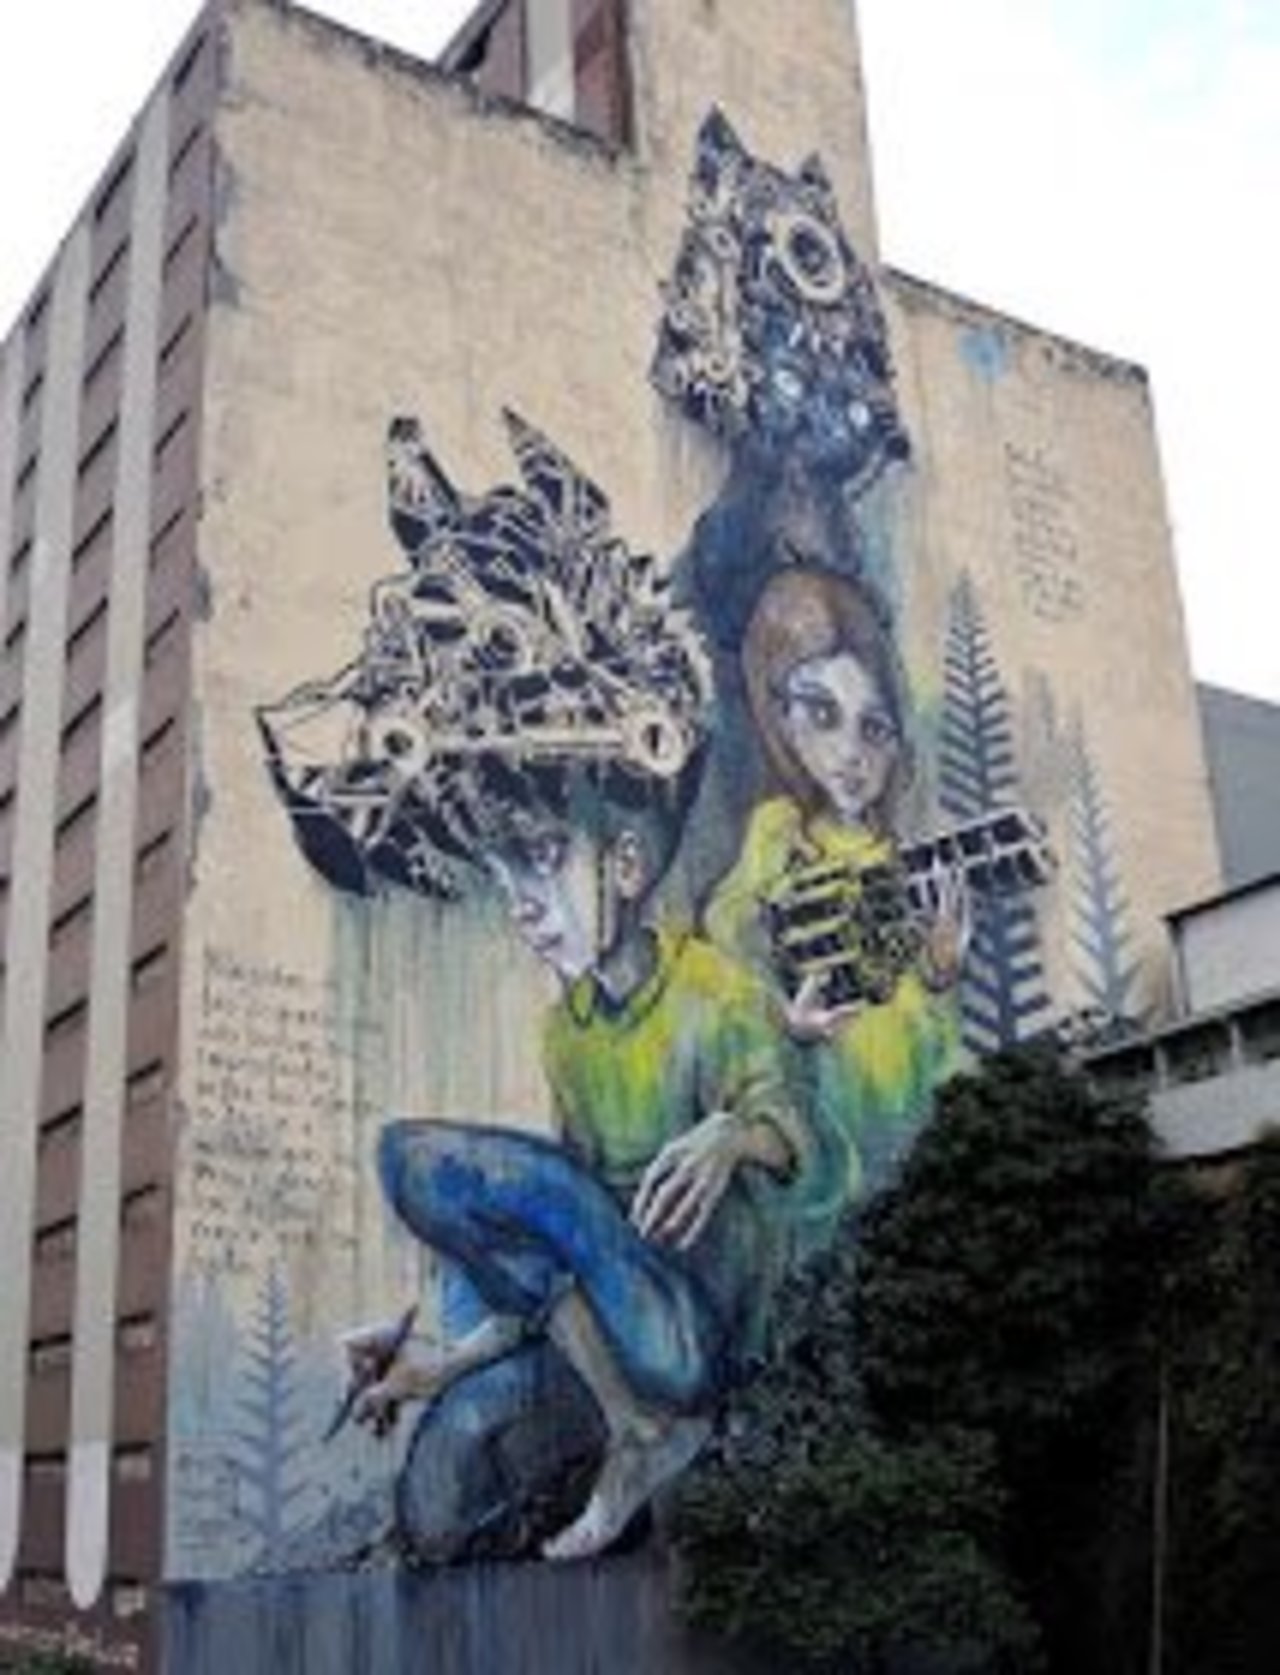 #Herakut & #M-City #streetart #mural in #SaoPaulo #Brazil #switch #bedifferent #graffiti #arte #art https://t.co/ONekkyrk9l